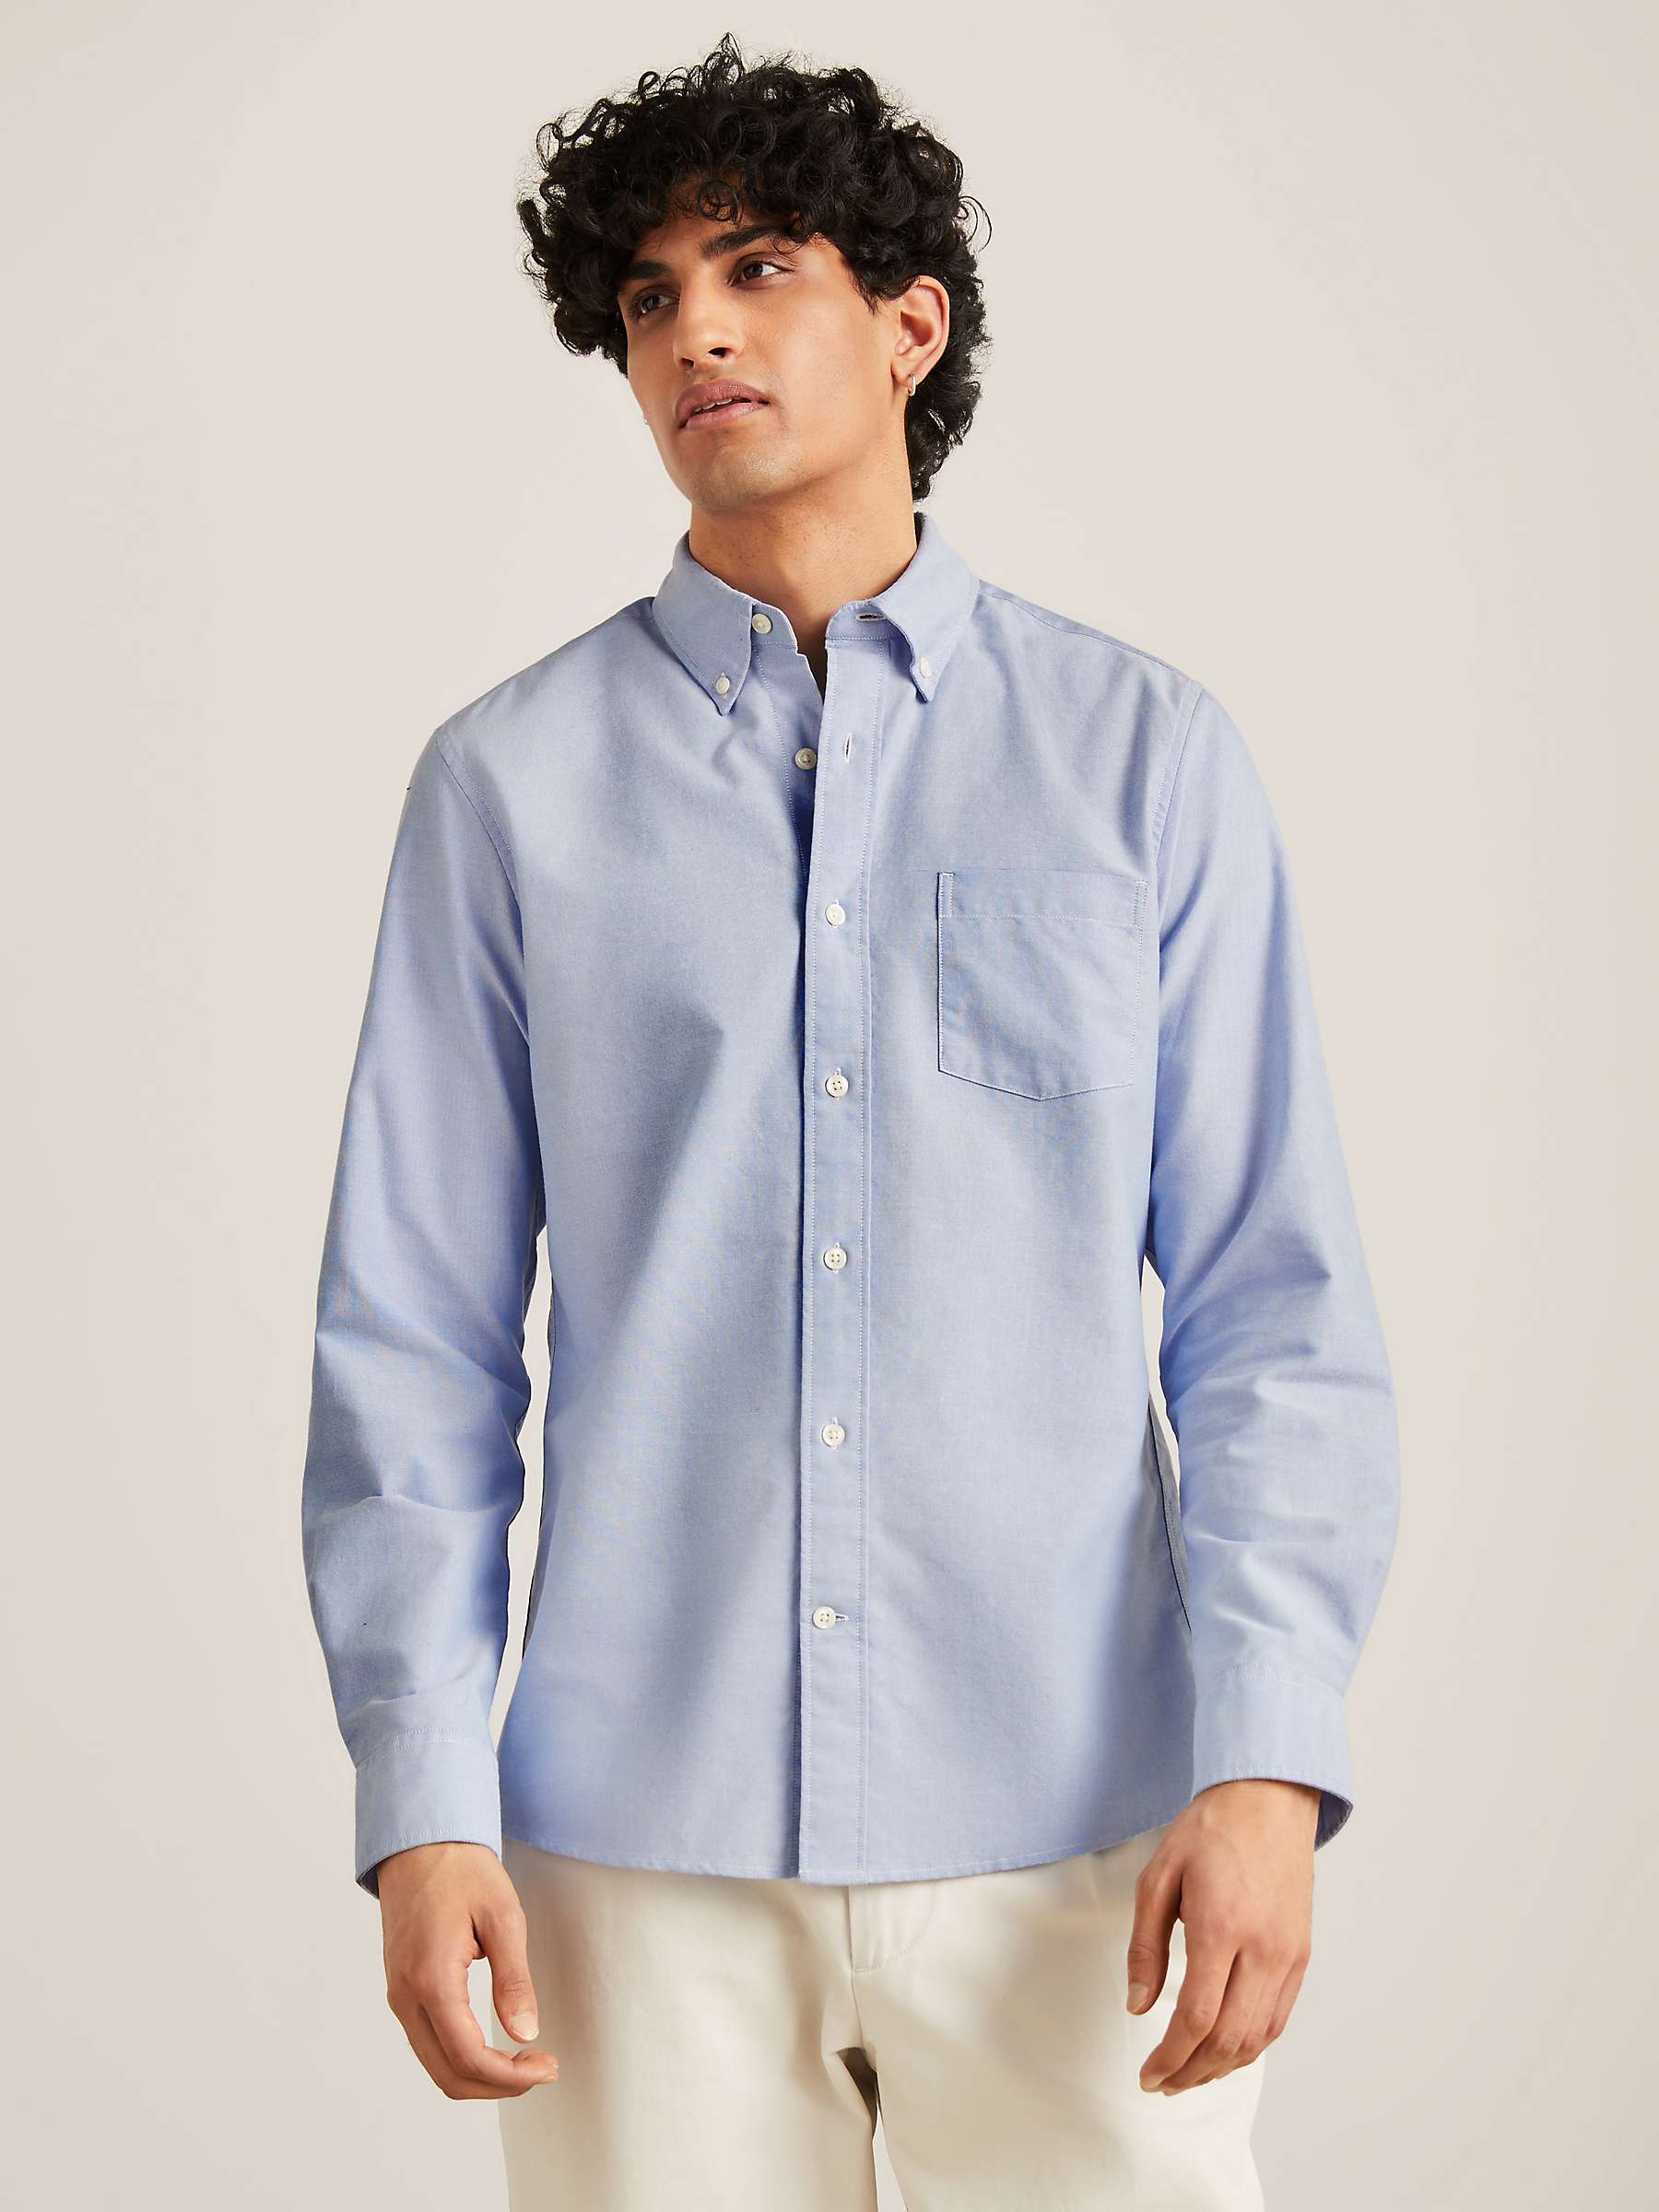 John Lewis Regular Fit Cotton Oxford Button Down Shirt, Blue at John Lewis  & Partners